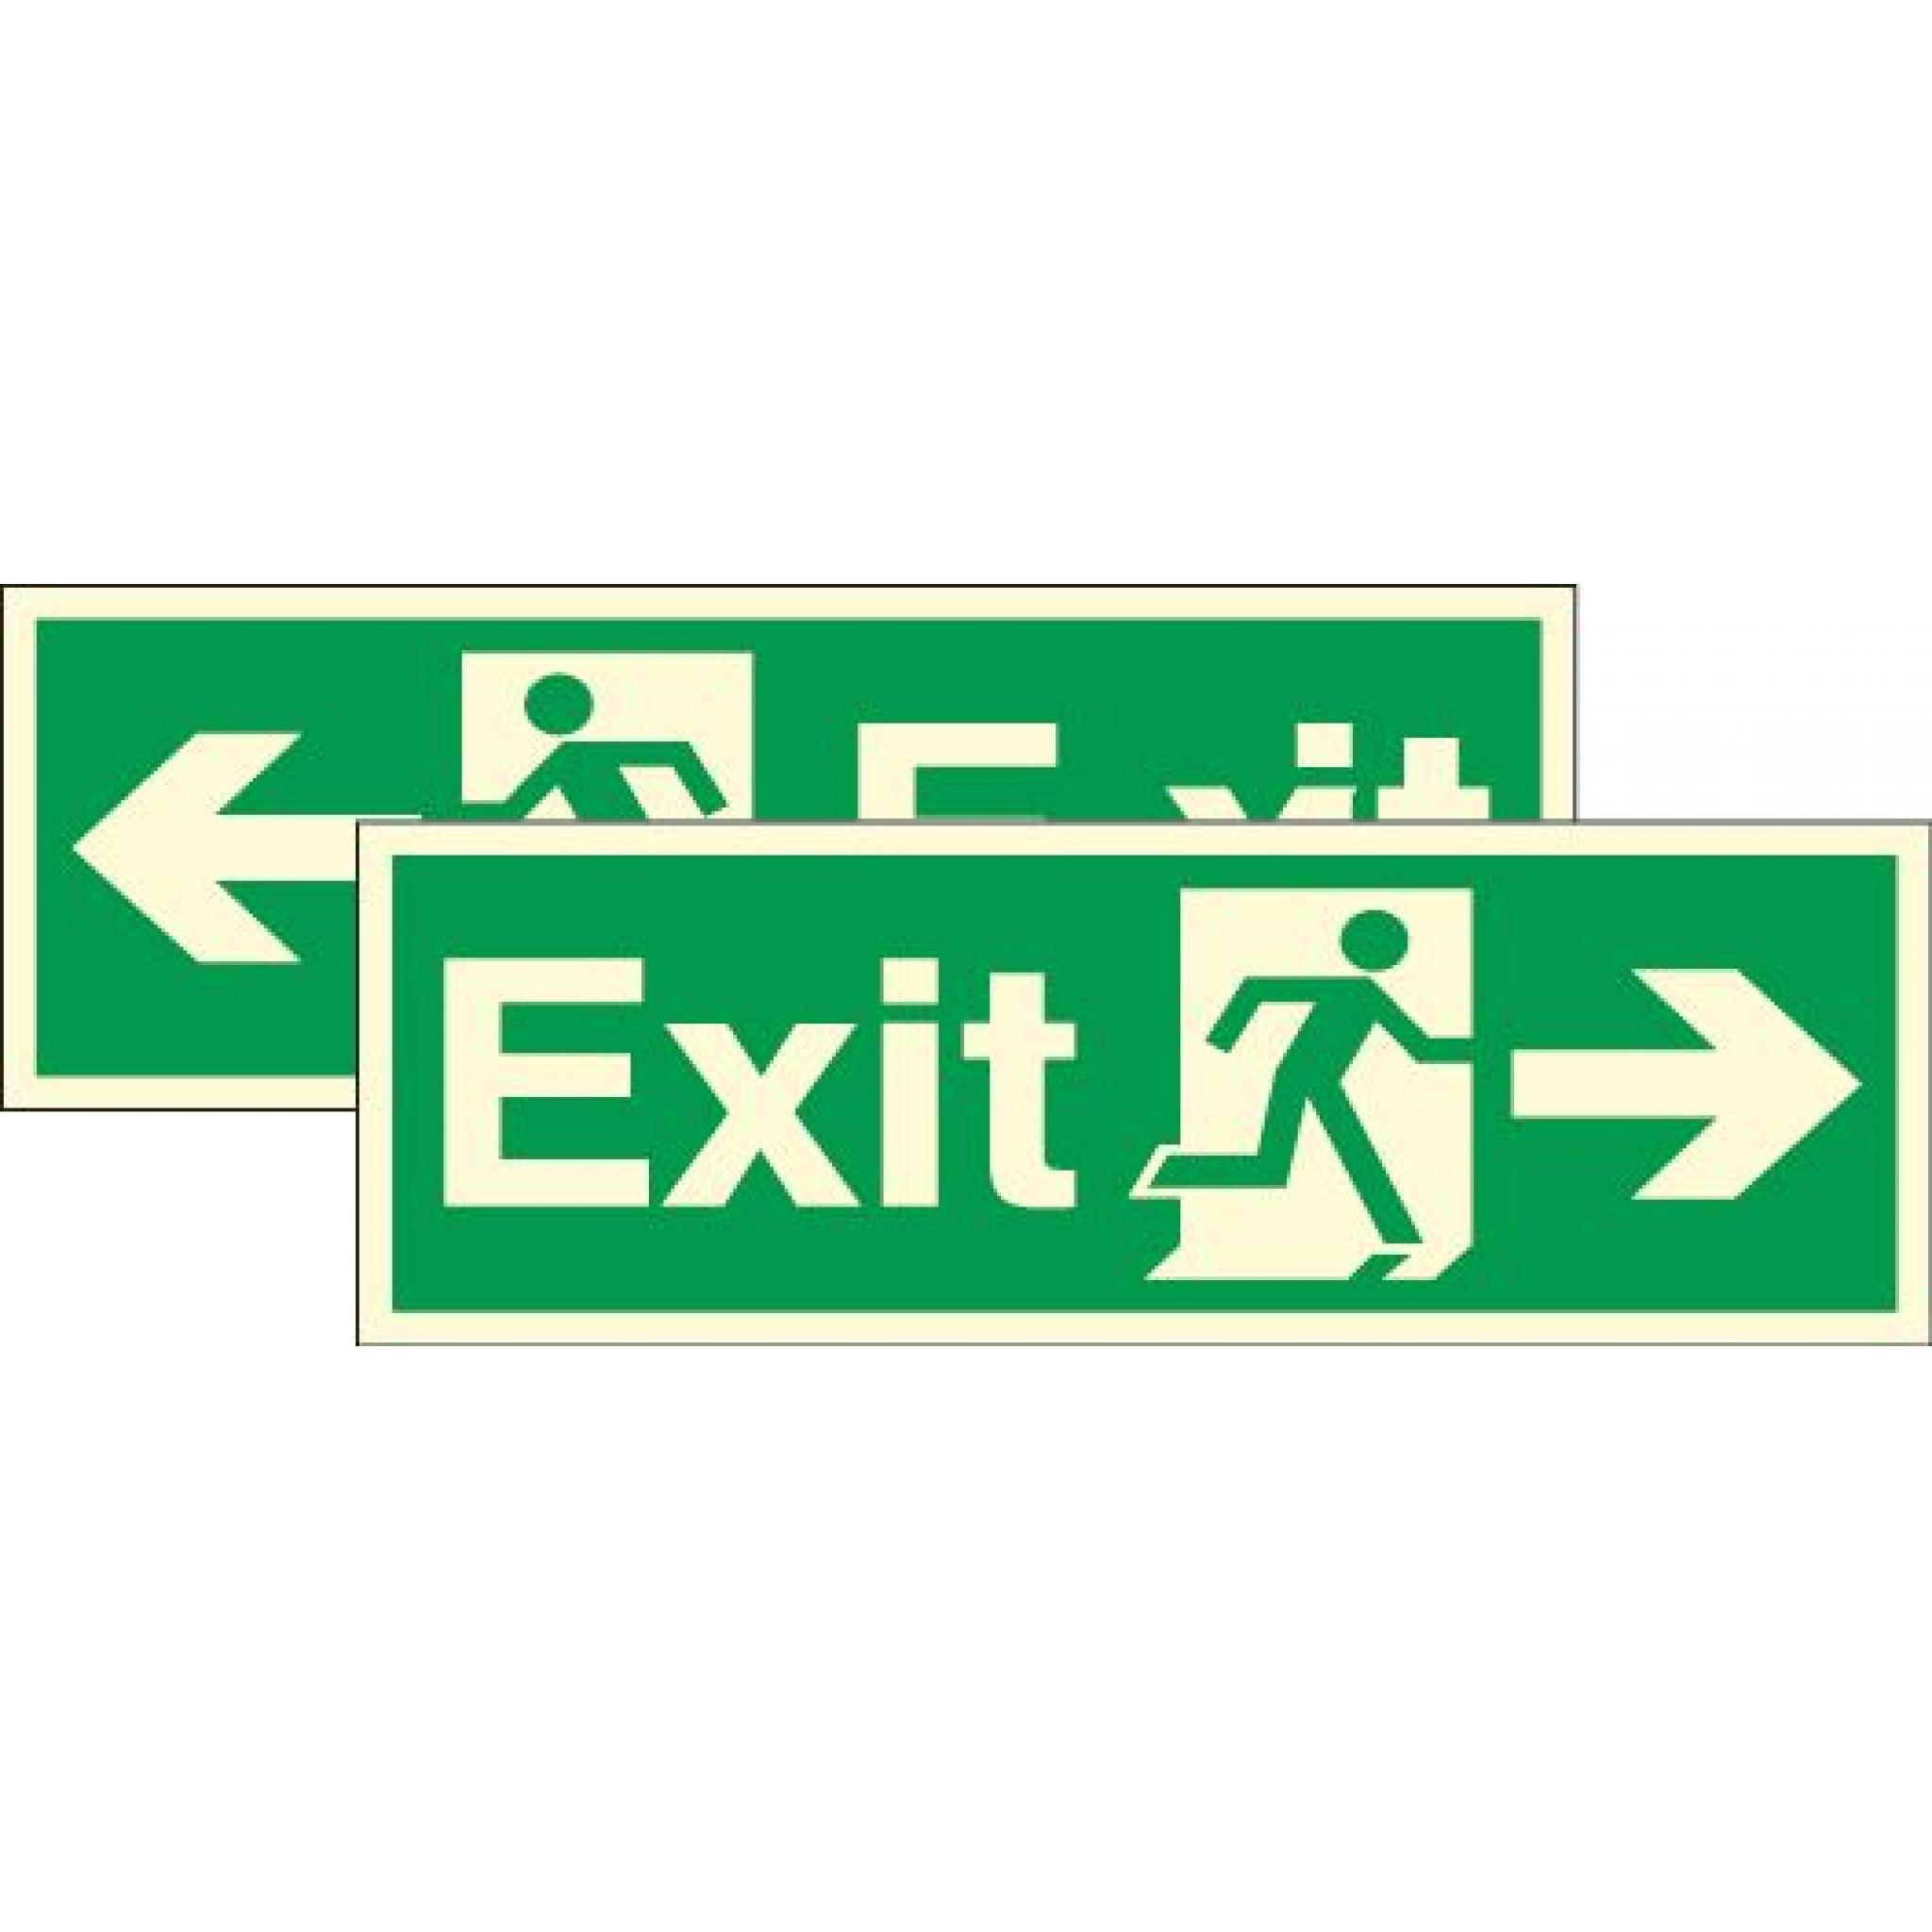 Exit - Running man - Right / left arrow (Double sided) (Photoluminescent)